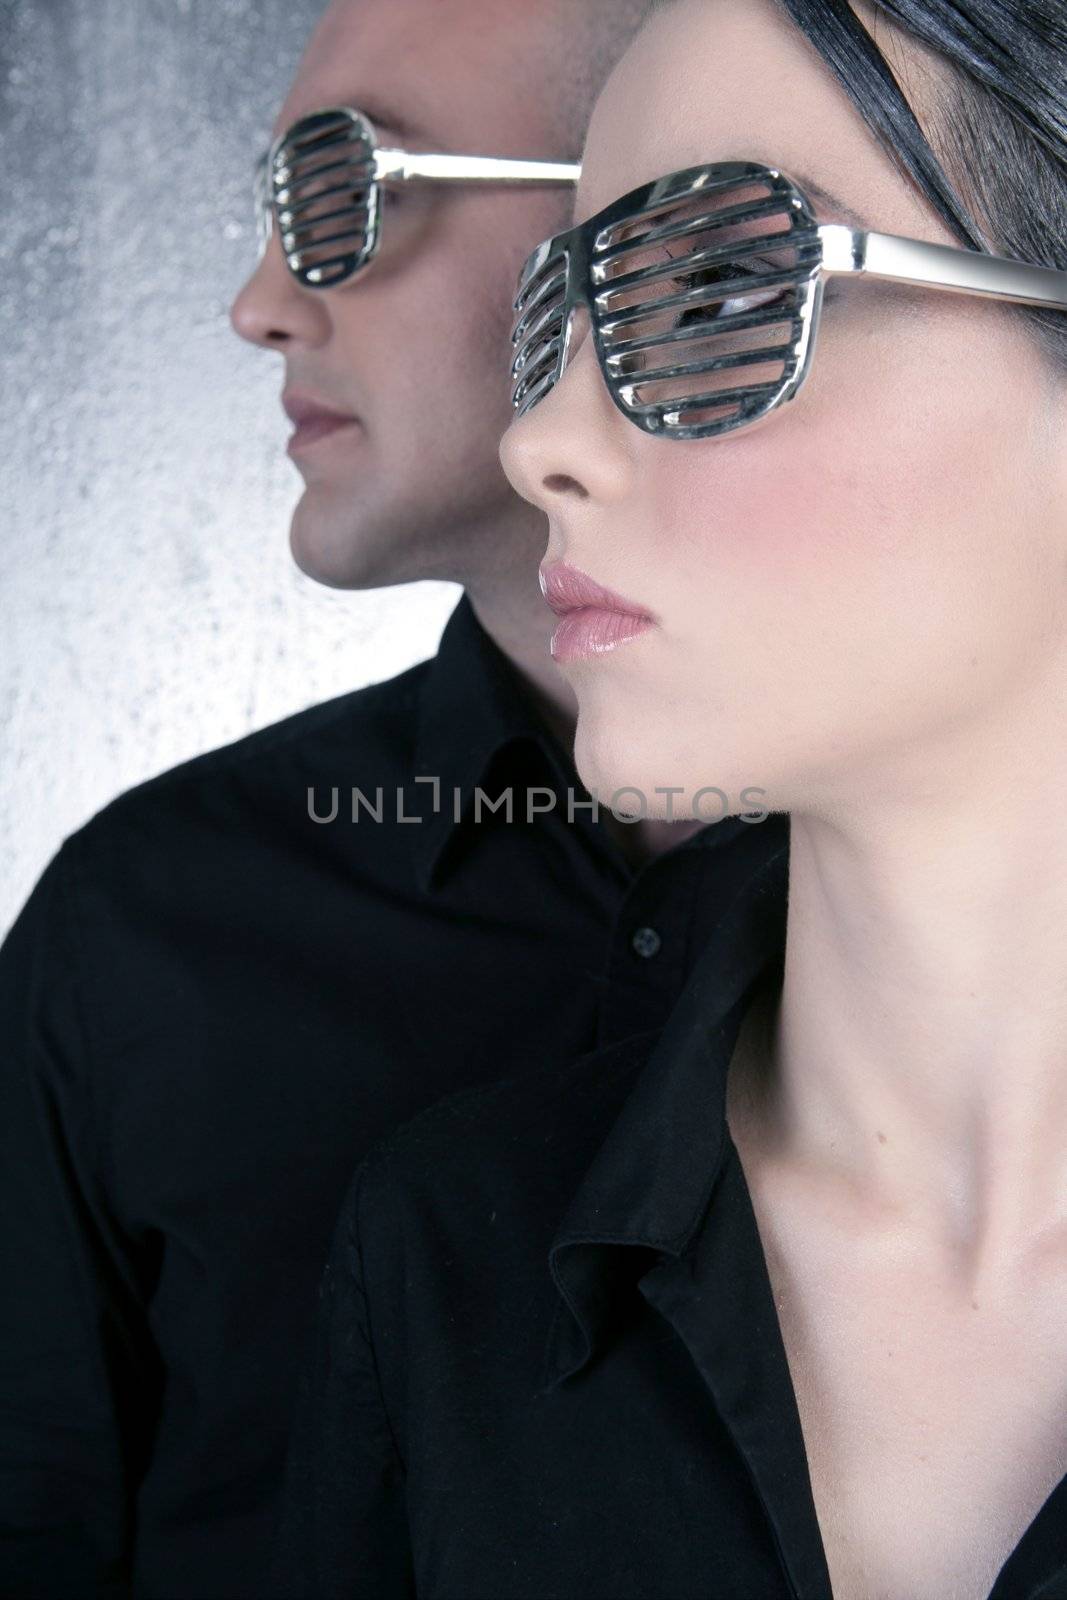 futuristic silver glasses couple portrait profile fashion future metaphor